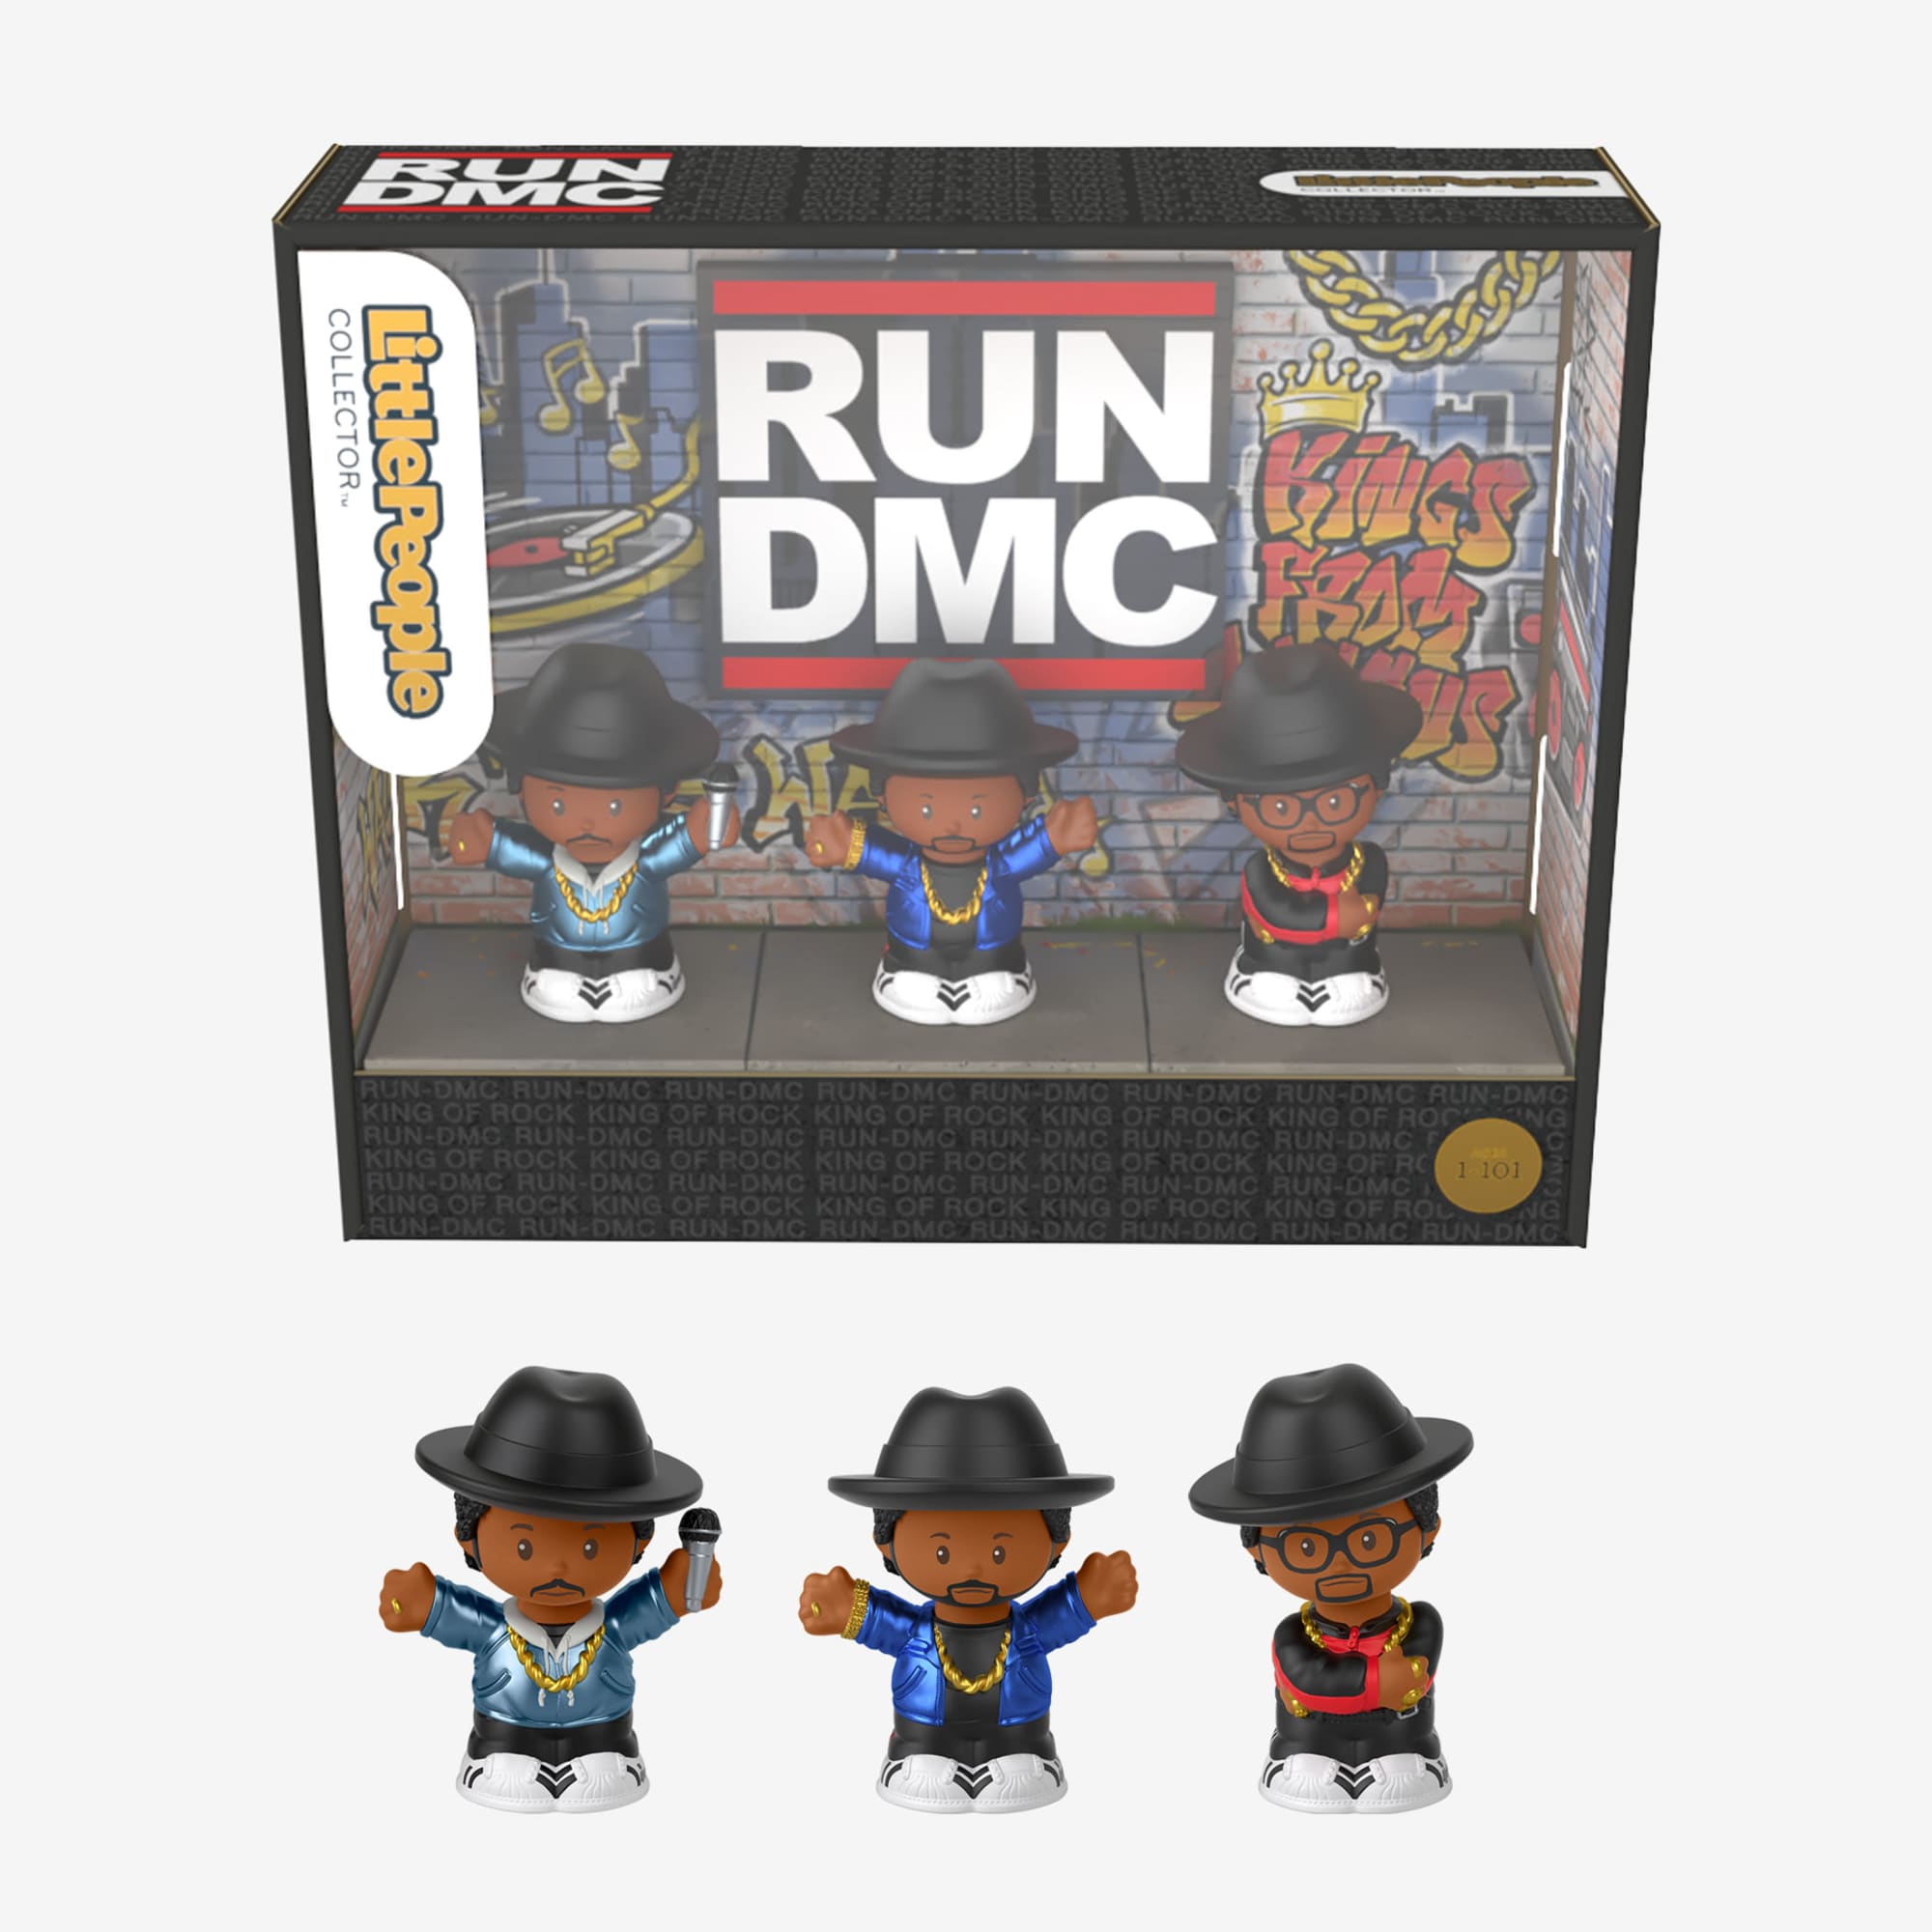 Little People Collector Run DMC Figures